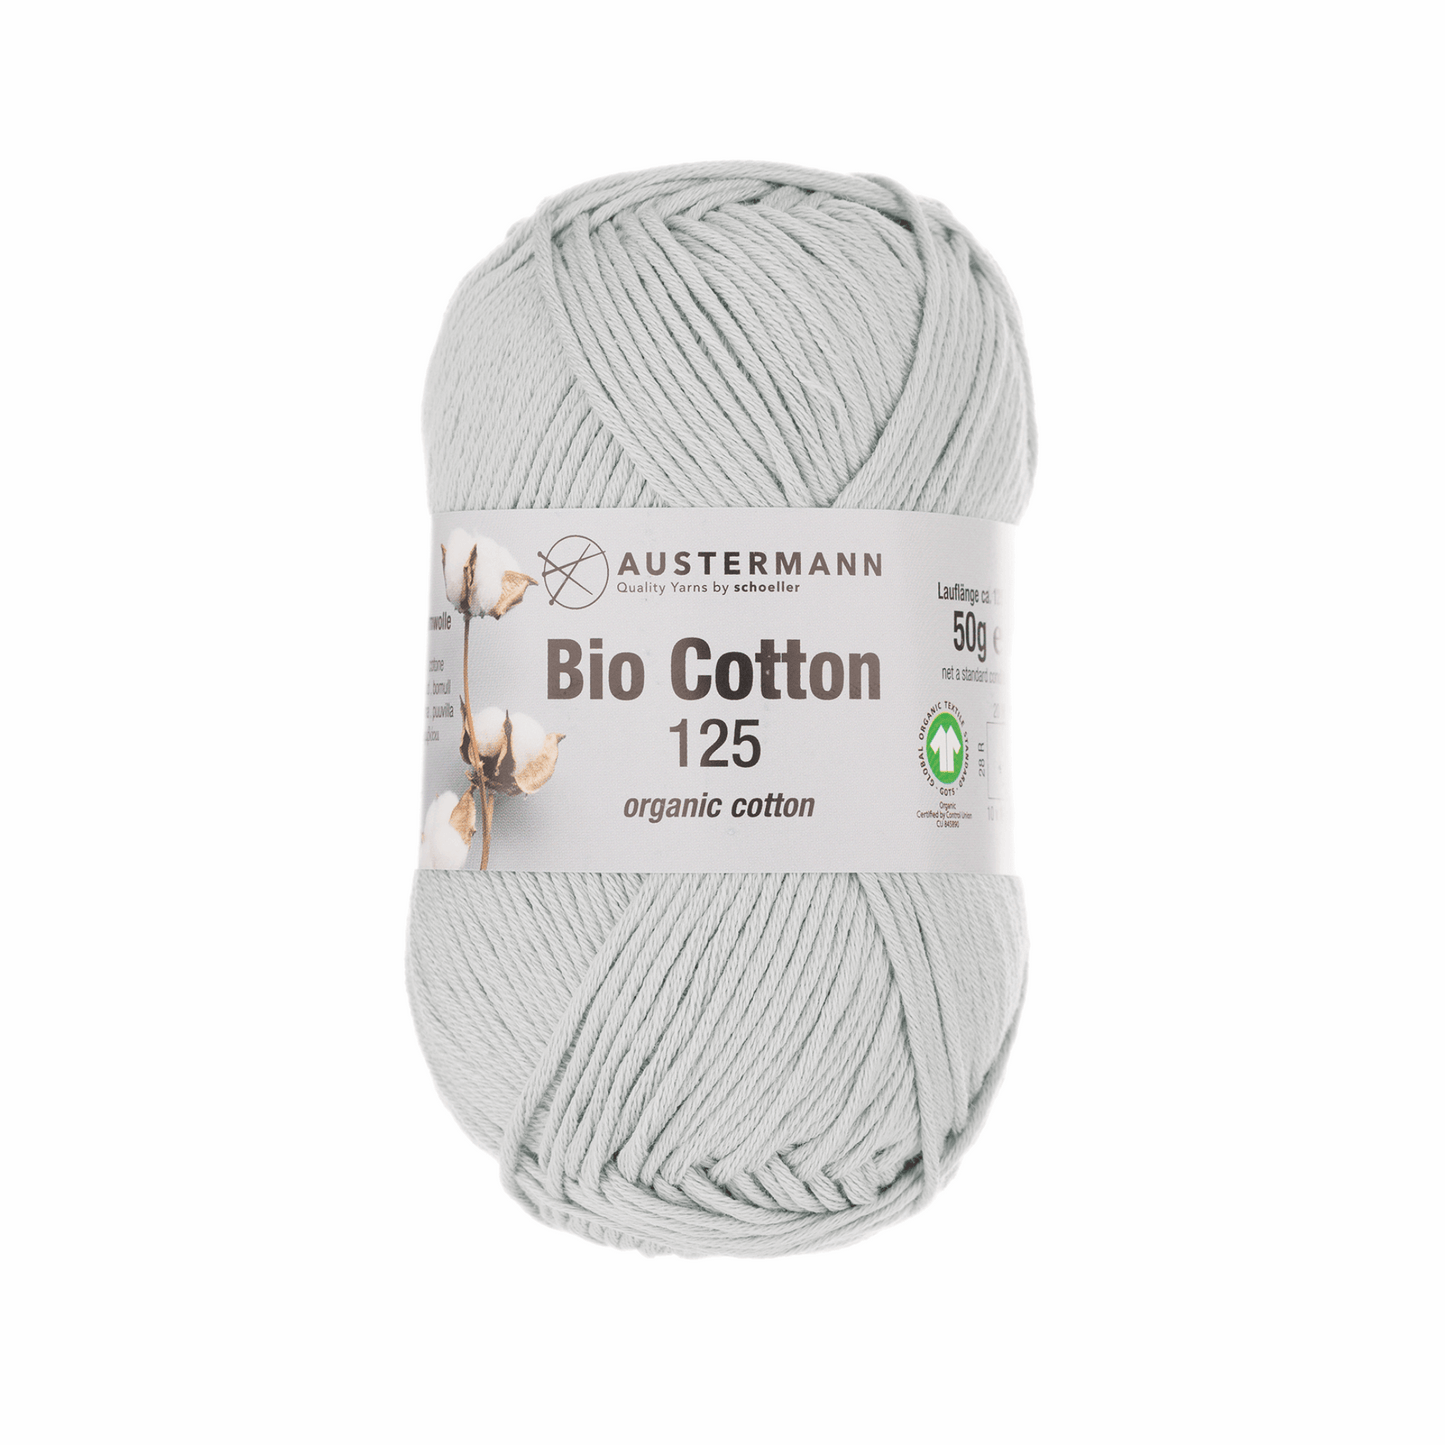 Gots organic Cotton 125 50g, 90345, color 17, silver